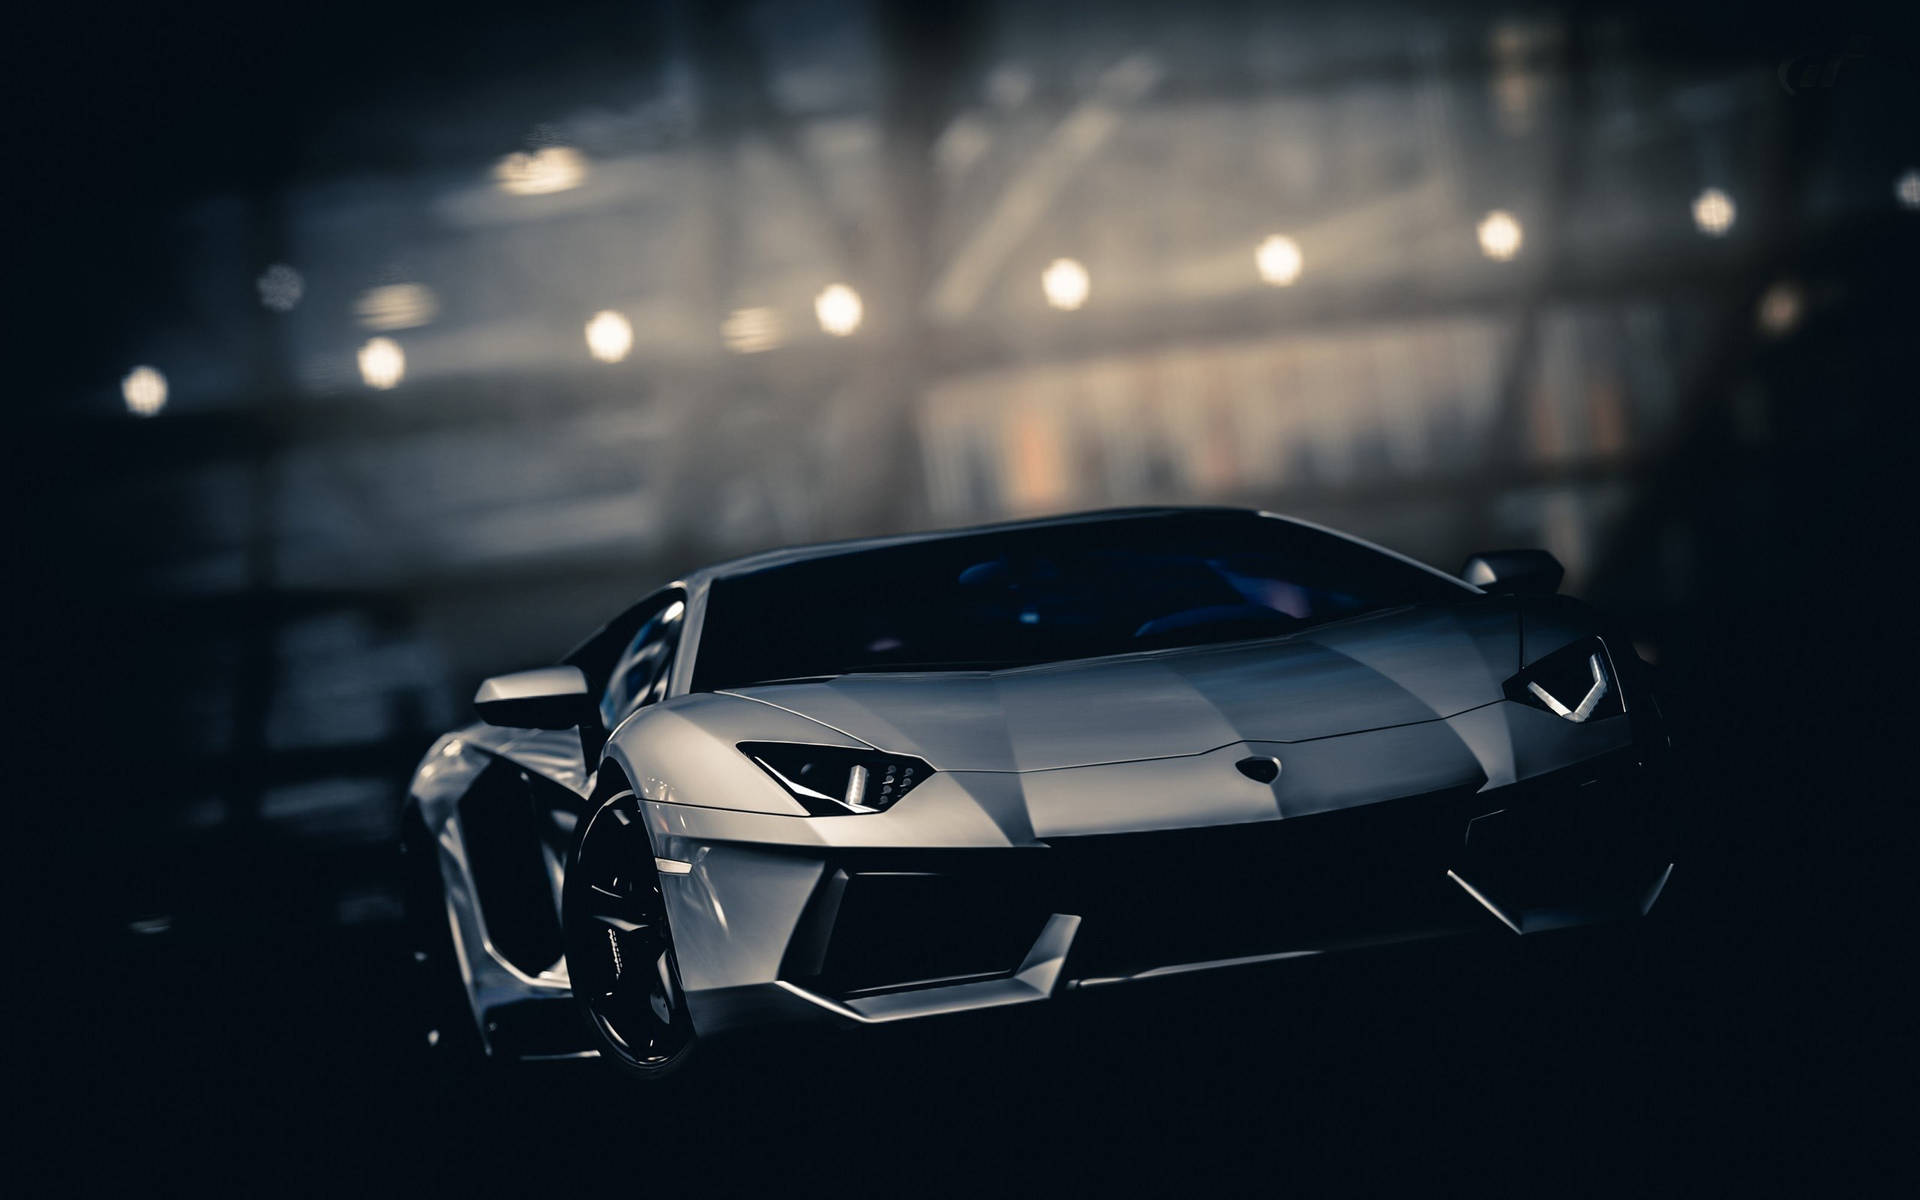 Cool Car Silver Lamborghini Background